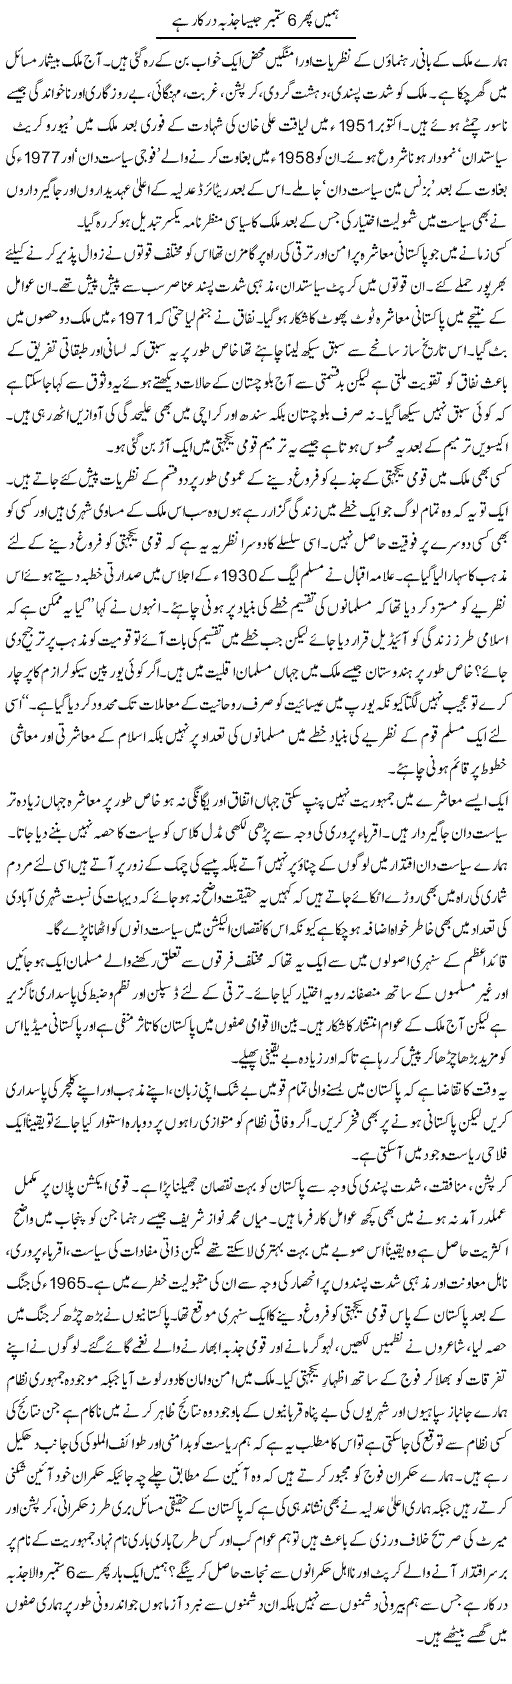 Hamein Phir 6 September Jaisa Jazba Darkaar Hai | Ikram Sehgal | Daily Urdu Columns